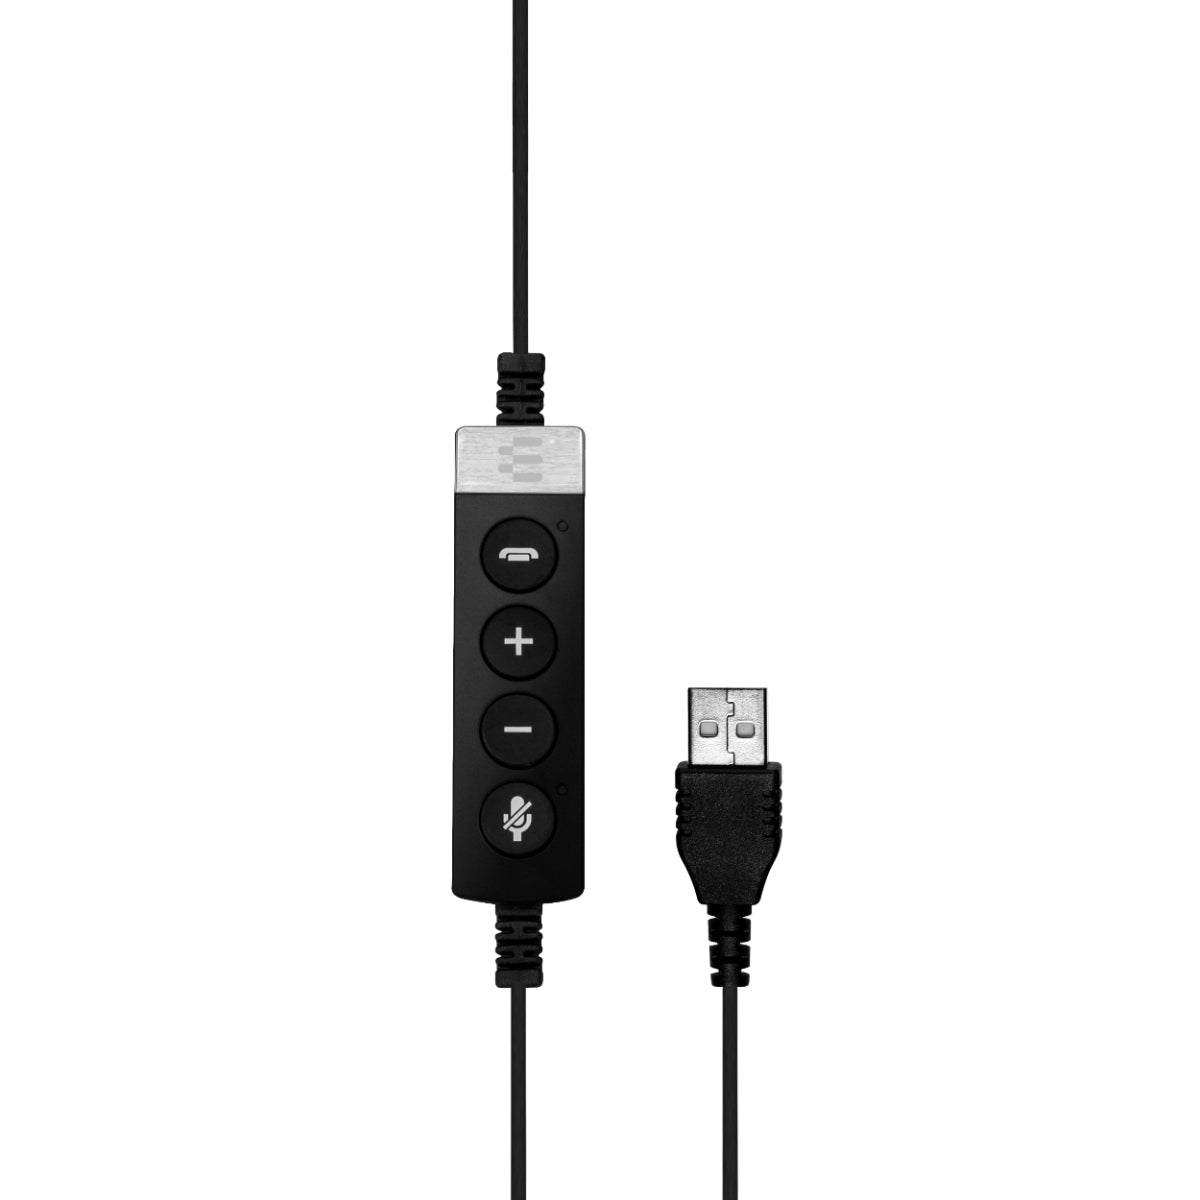 EPOS IMPACT SC 230 USB MS II Monaural Office Headset, Black, 2.9m Cable, USB Connectivity